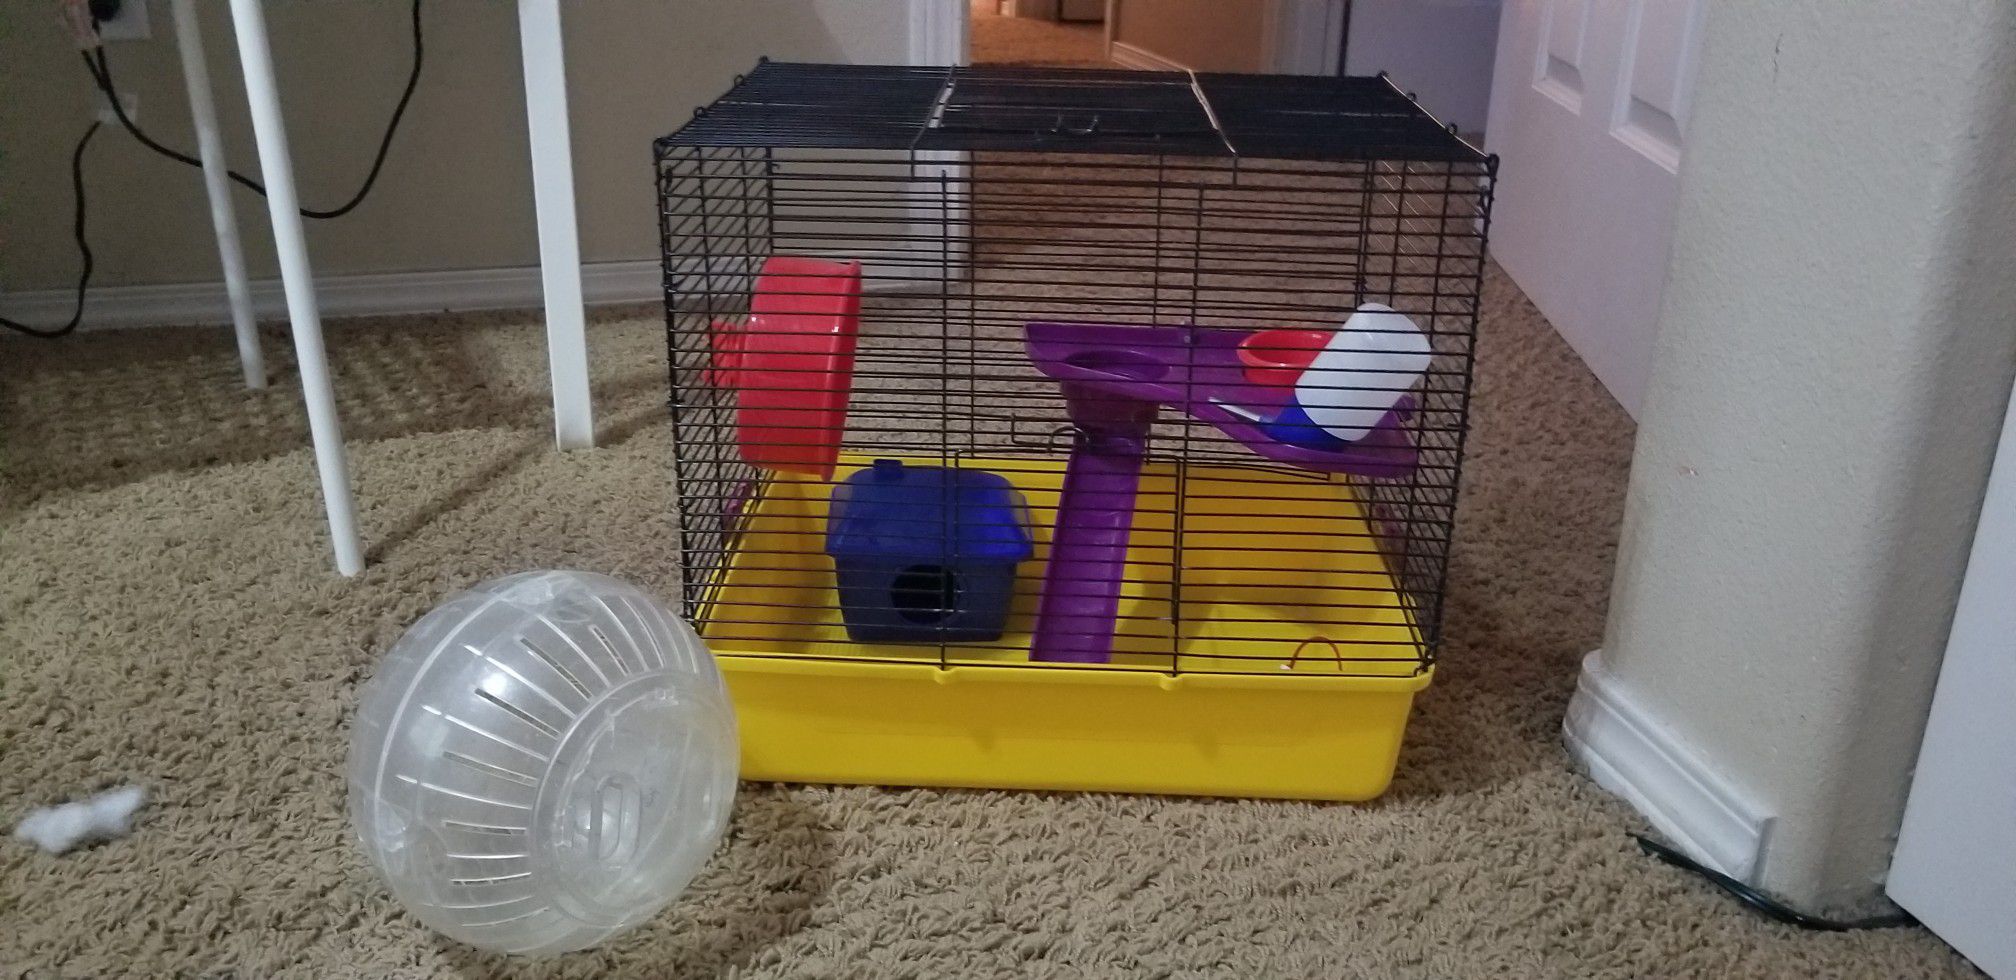 Hamster cage setup